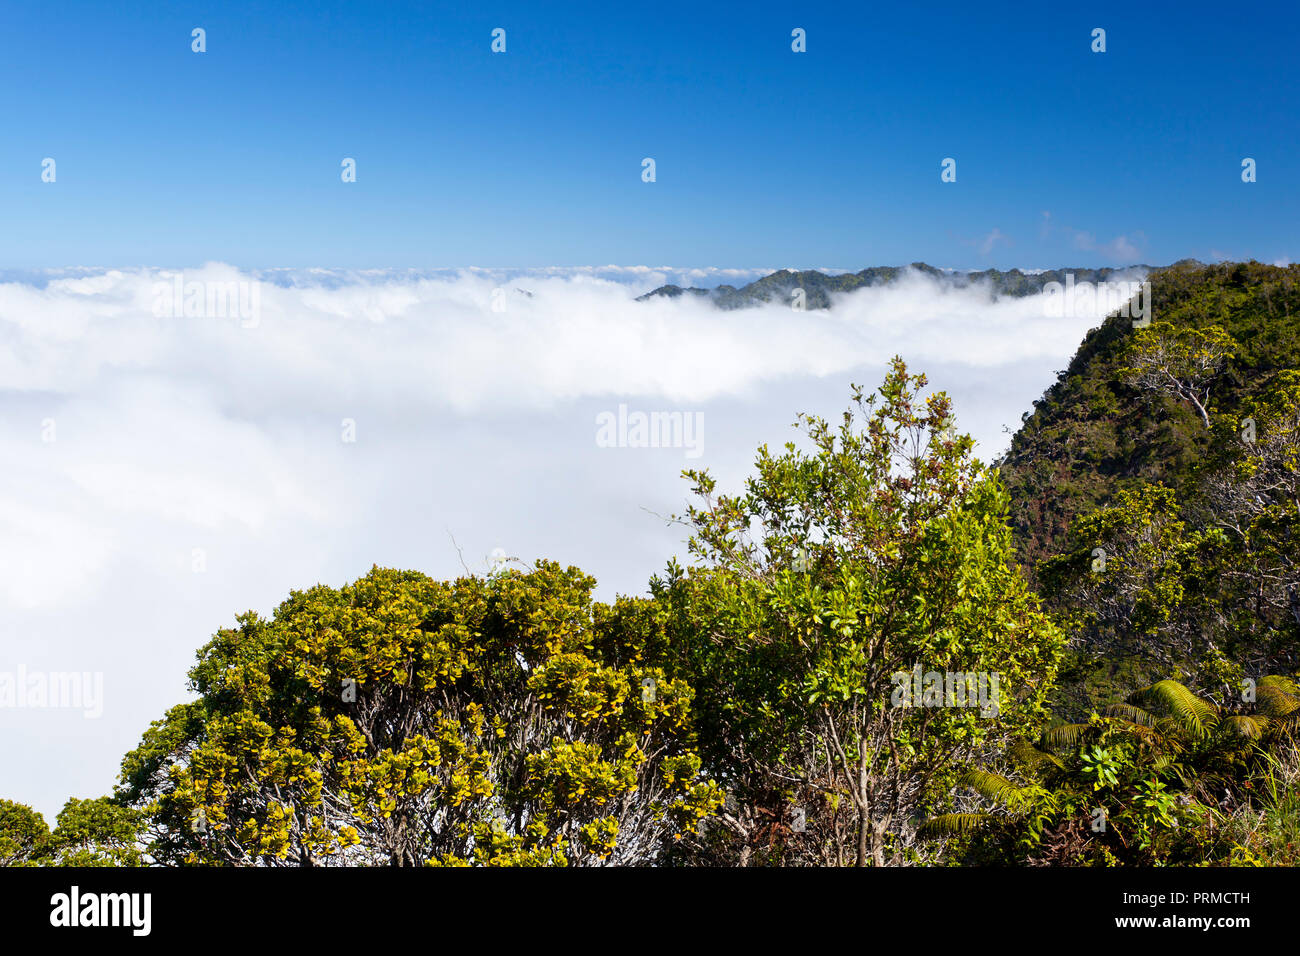 La famosa valle Kalalau a sinistra completamente coperto di nuvole in Kauai, Hawaii. Foto Stock